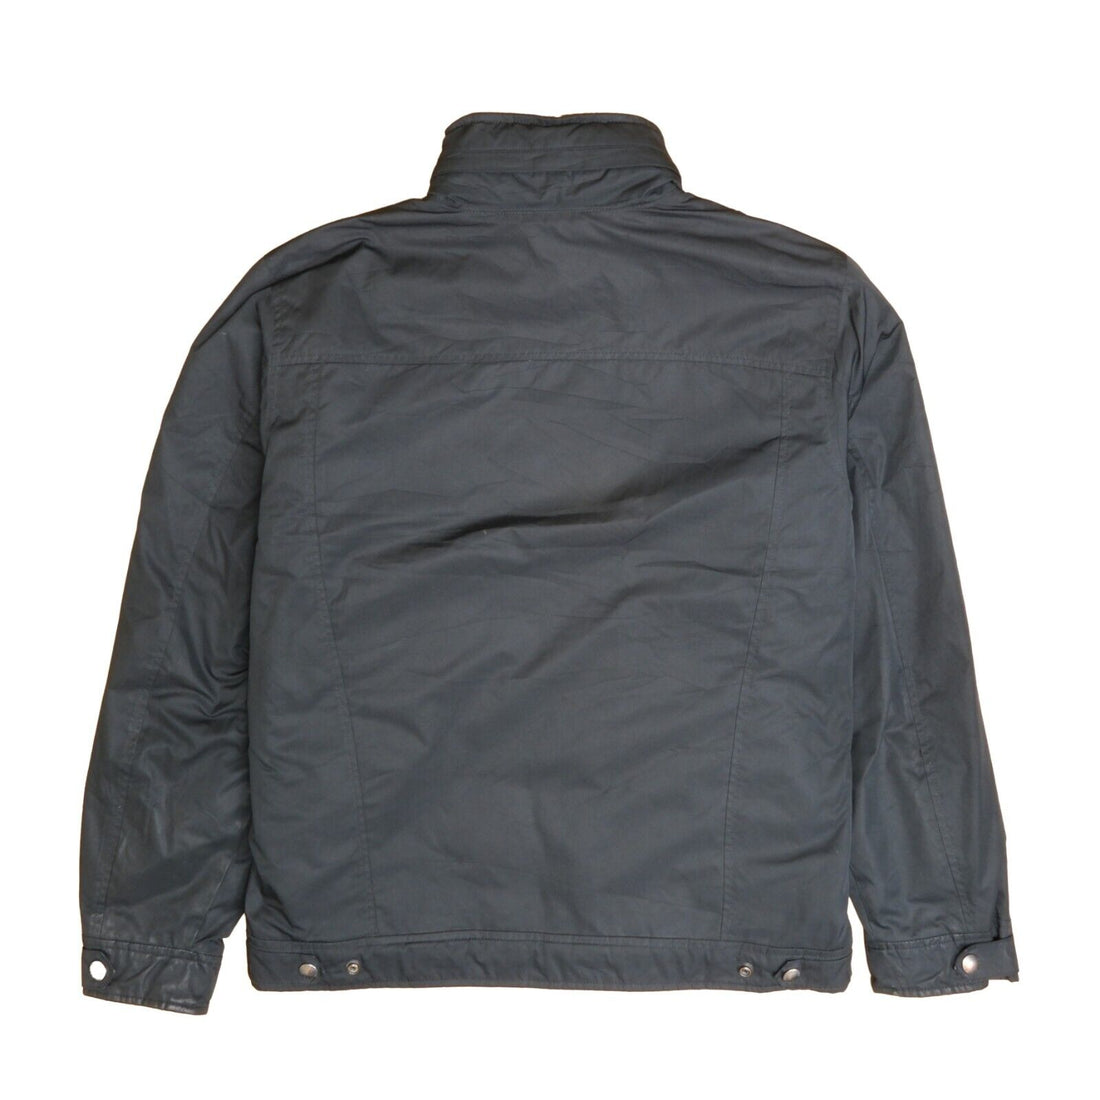 Vintage Polo Ralph Lauren Bomber Jacket Size Medium Black Fleece Lined